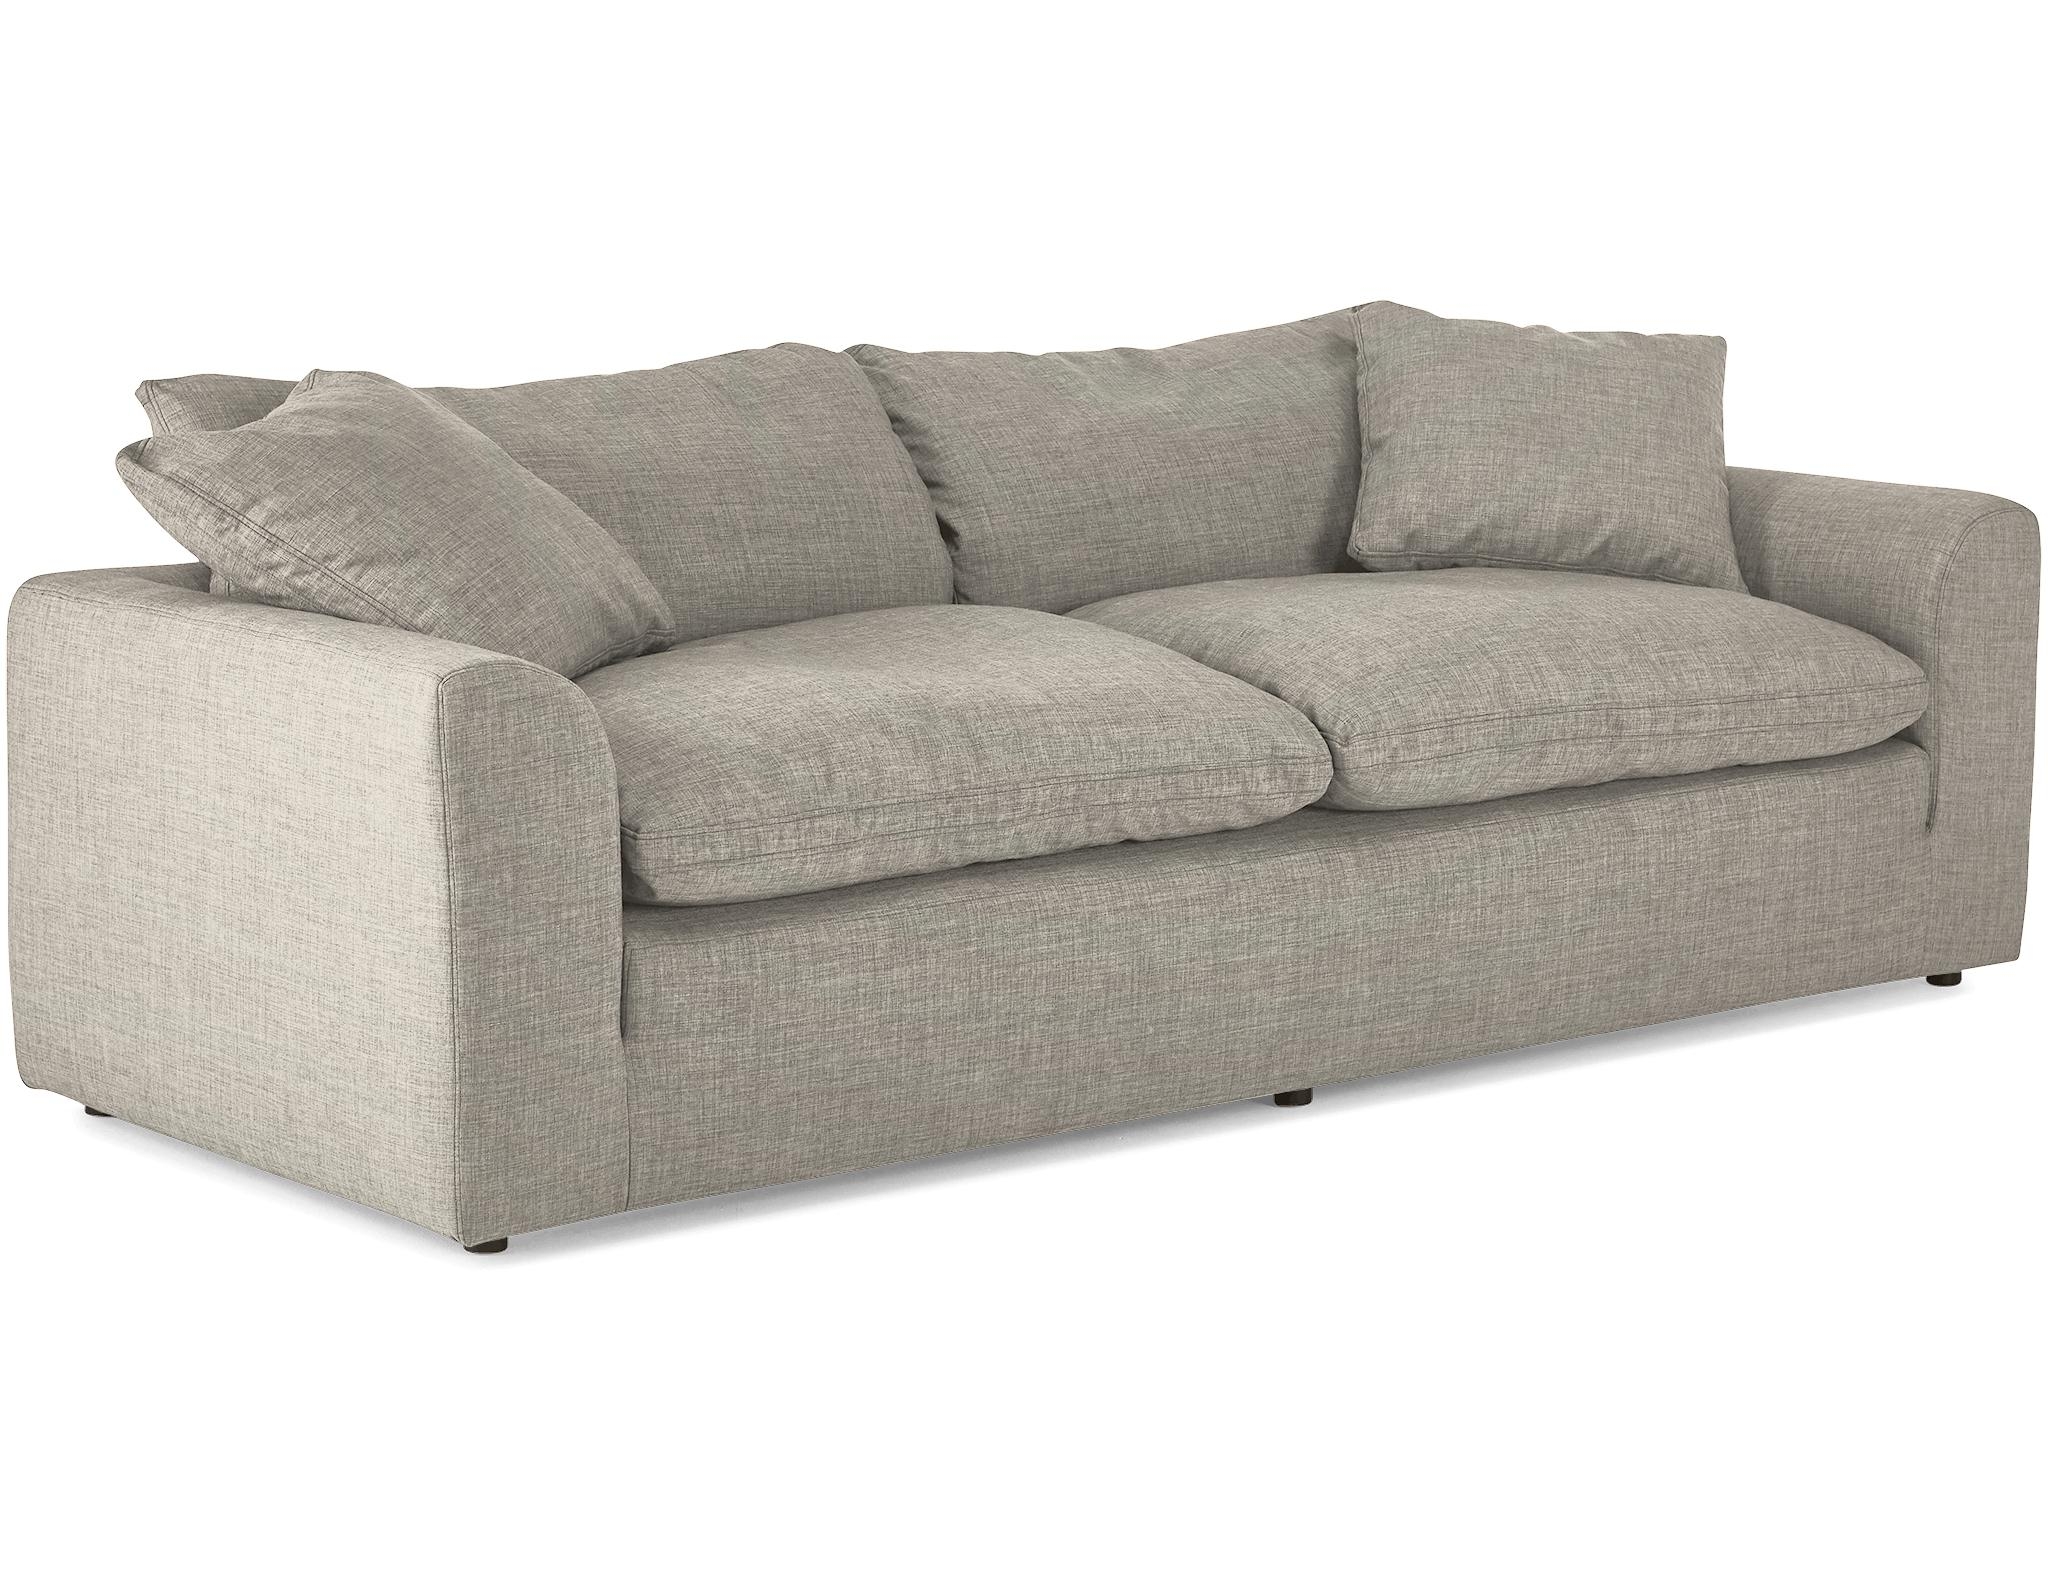 White Bryant Mid Century Modern Sofa - Bloke Cotton - Image 1